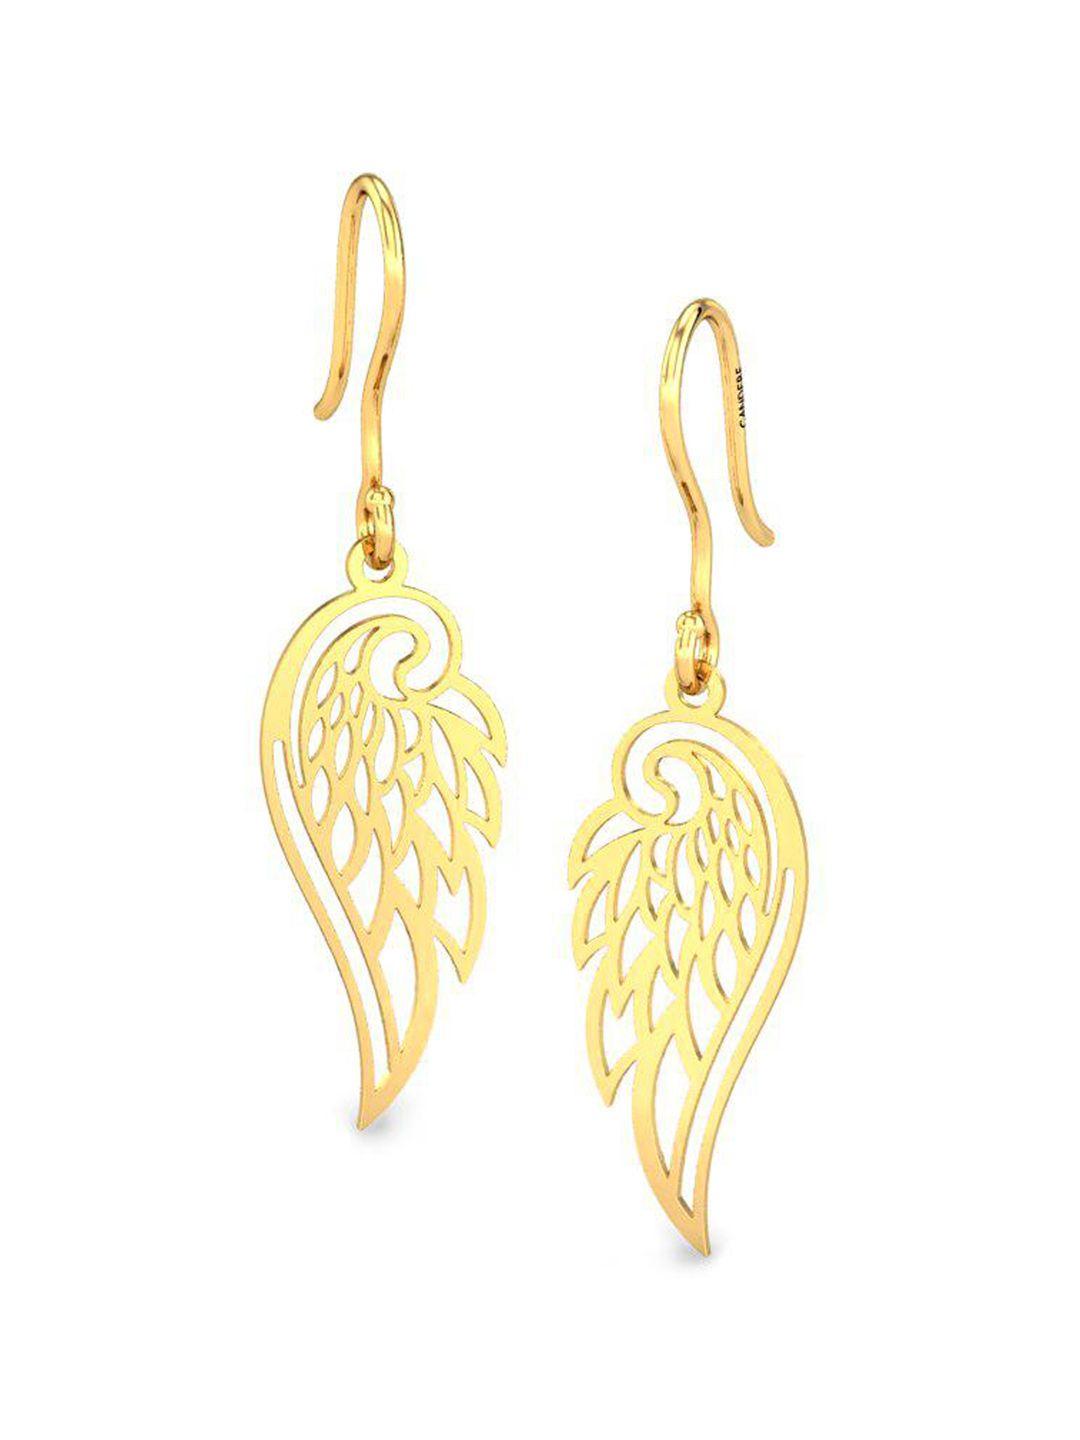 candere a kalyan jewellers company 18kt gold dangle drop earrings - 1.83 gm